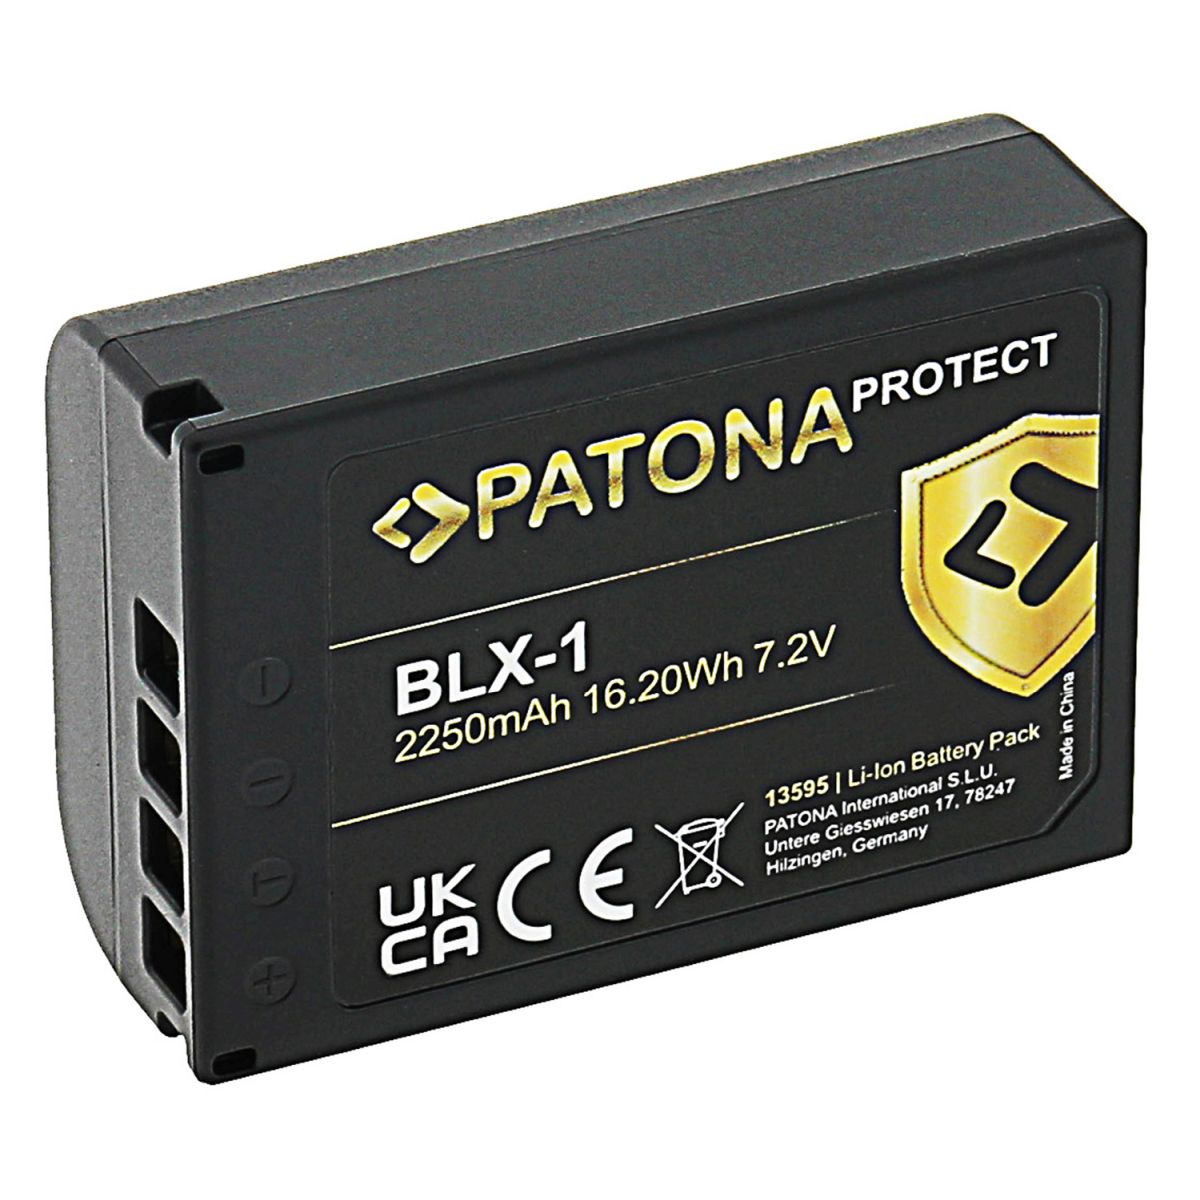 Patona Protect Akku f. Olympus BLX-1 OM-1